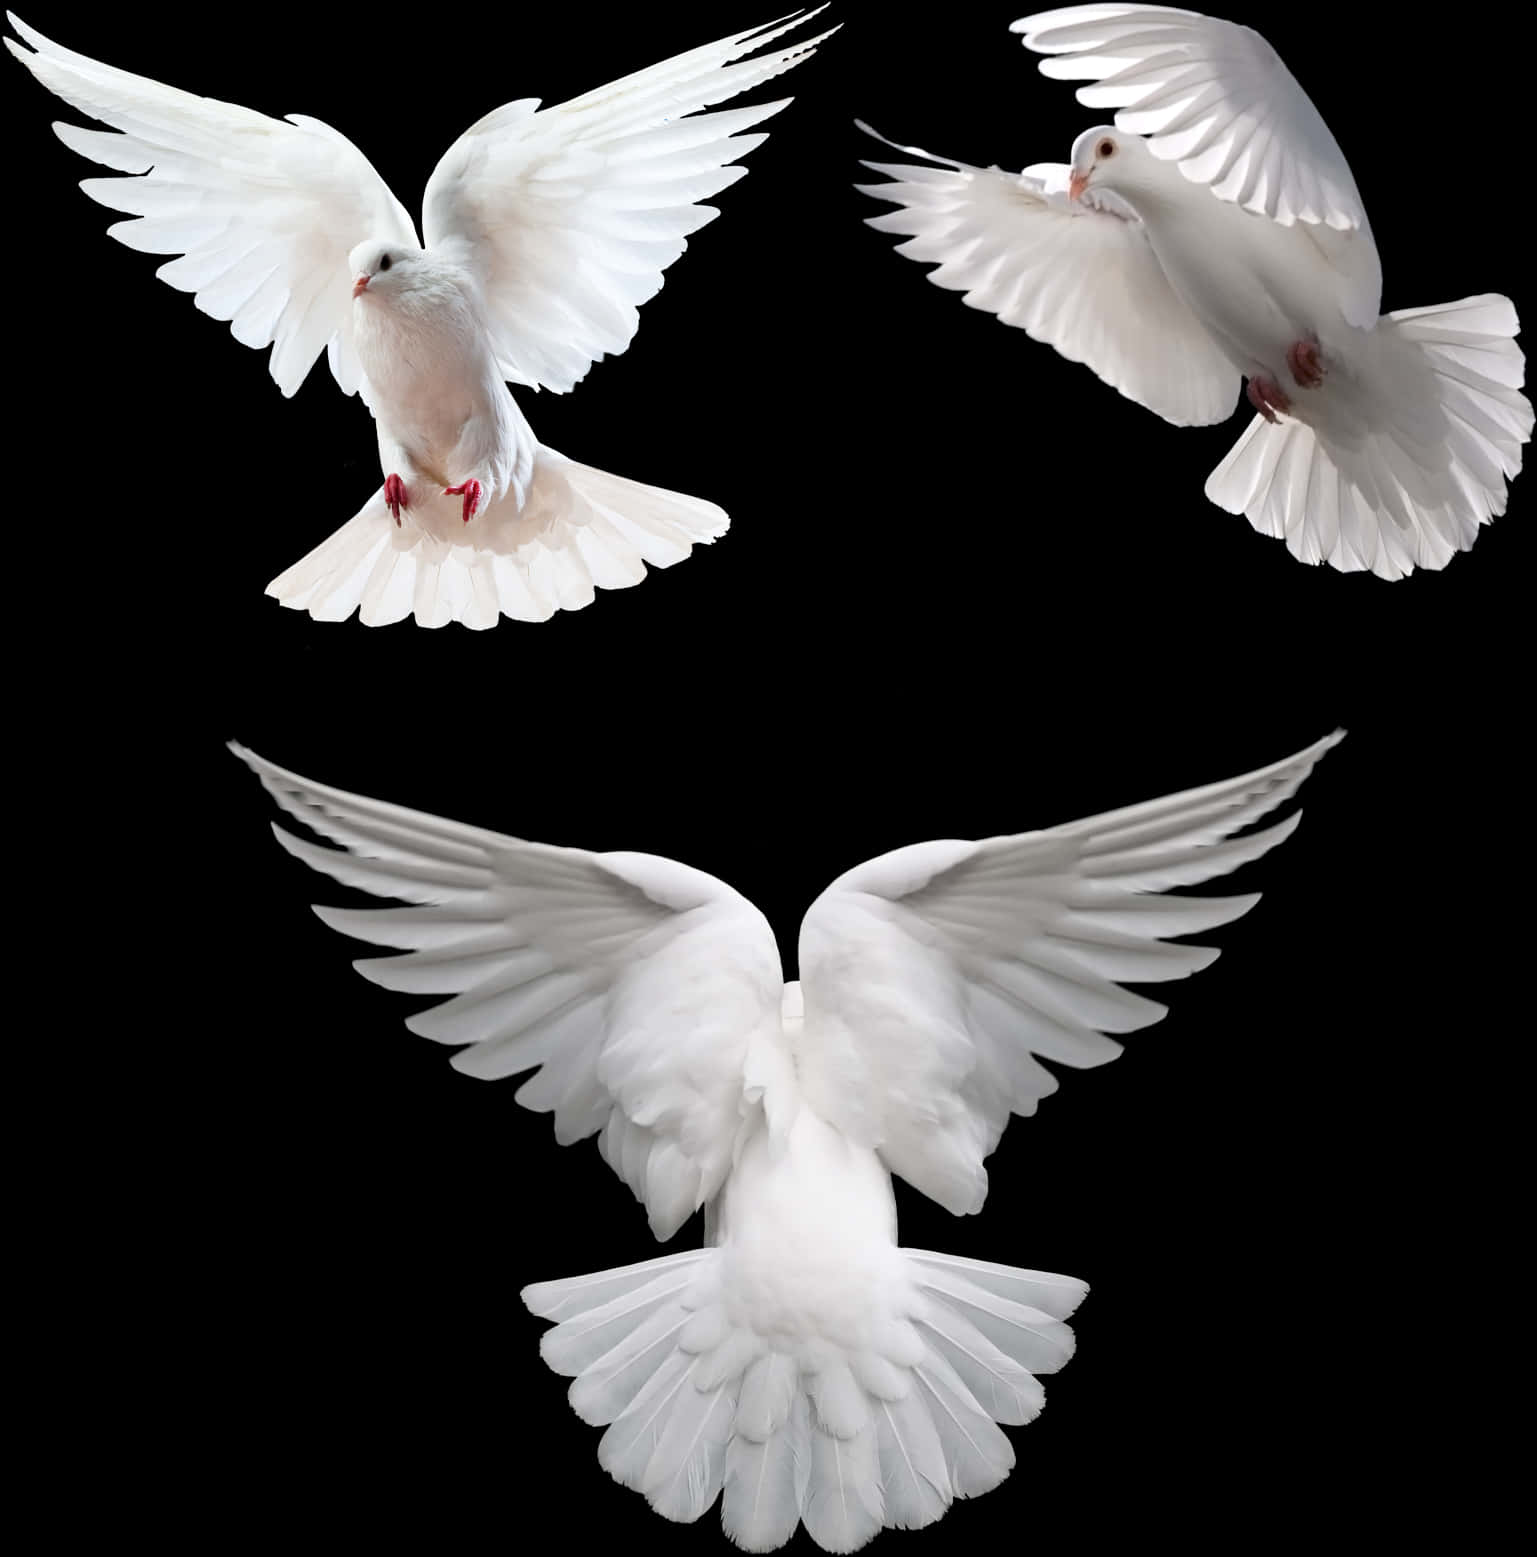 Three White Doves In Flight